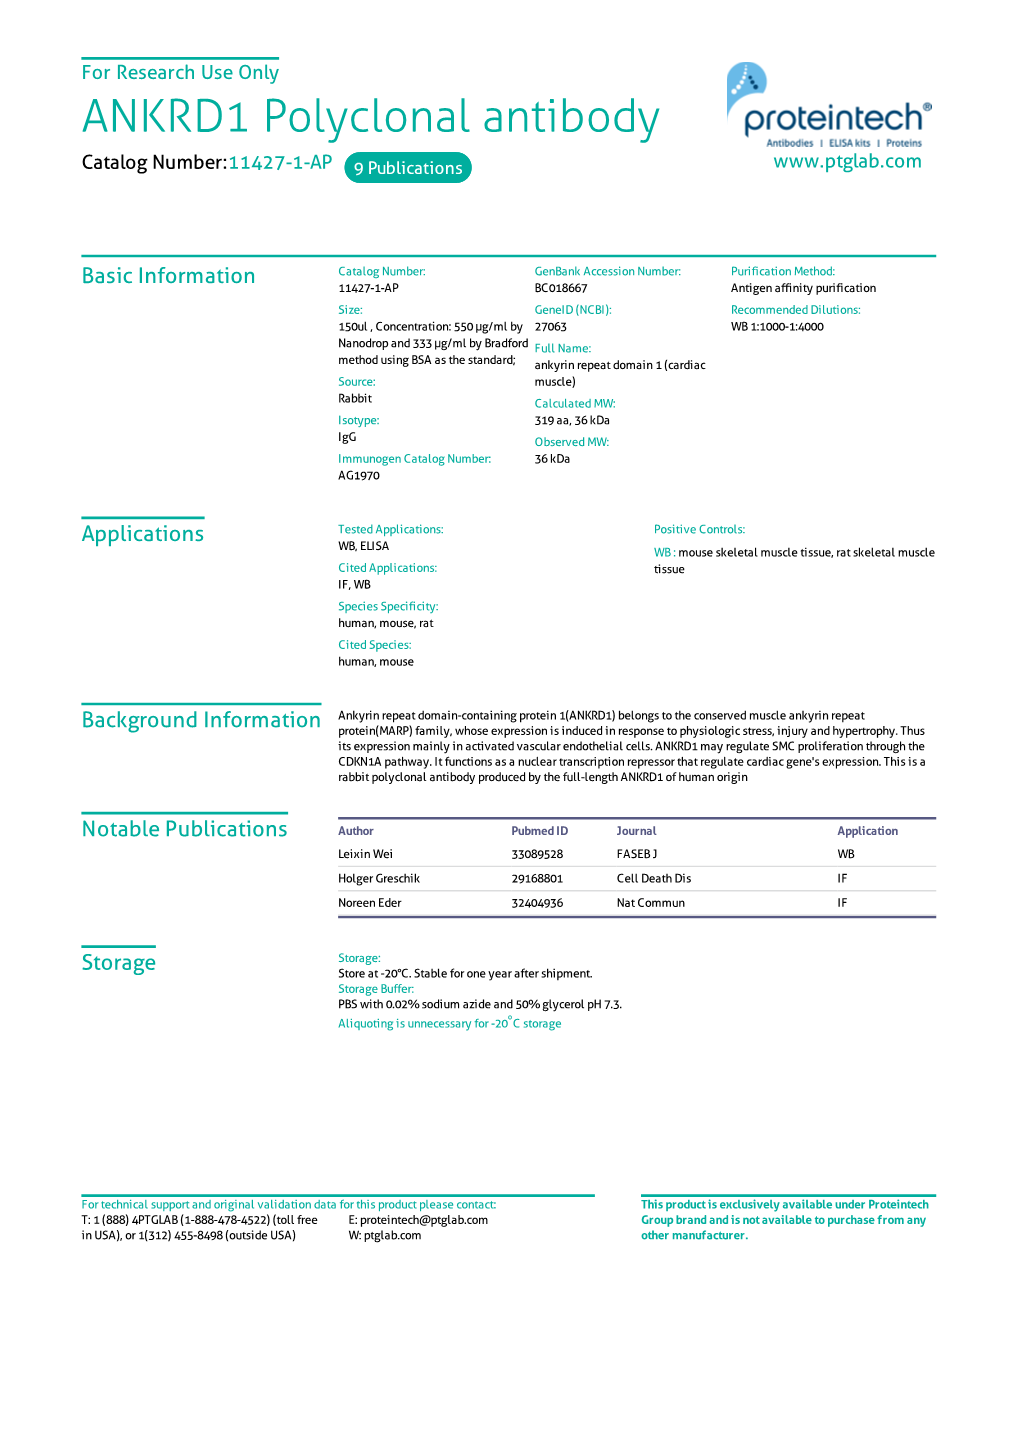 ANKRD1 Polyclonal Antibody Catalog Number:11427-1-AP 9 Publications